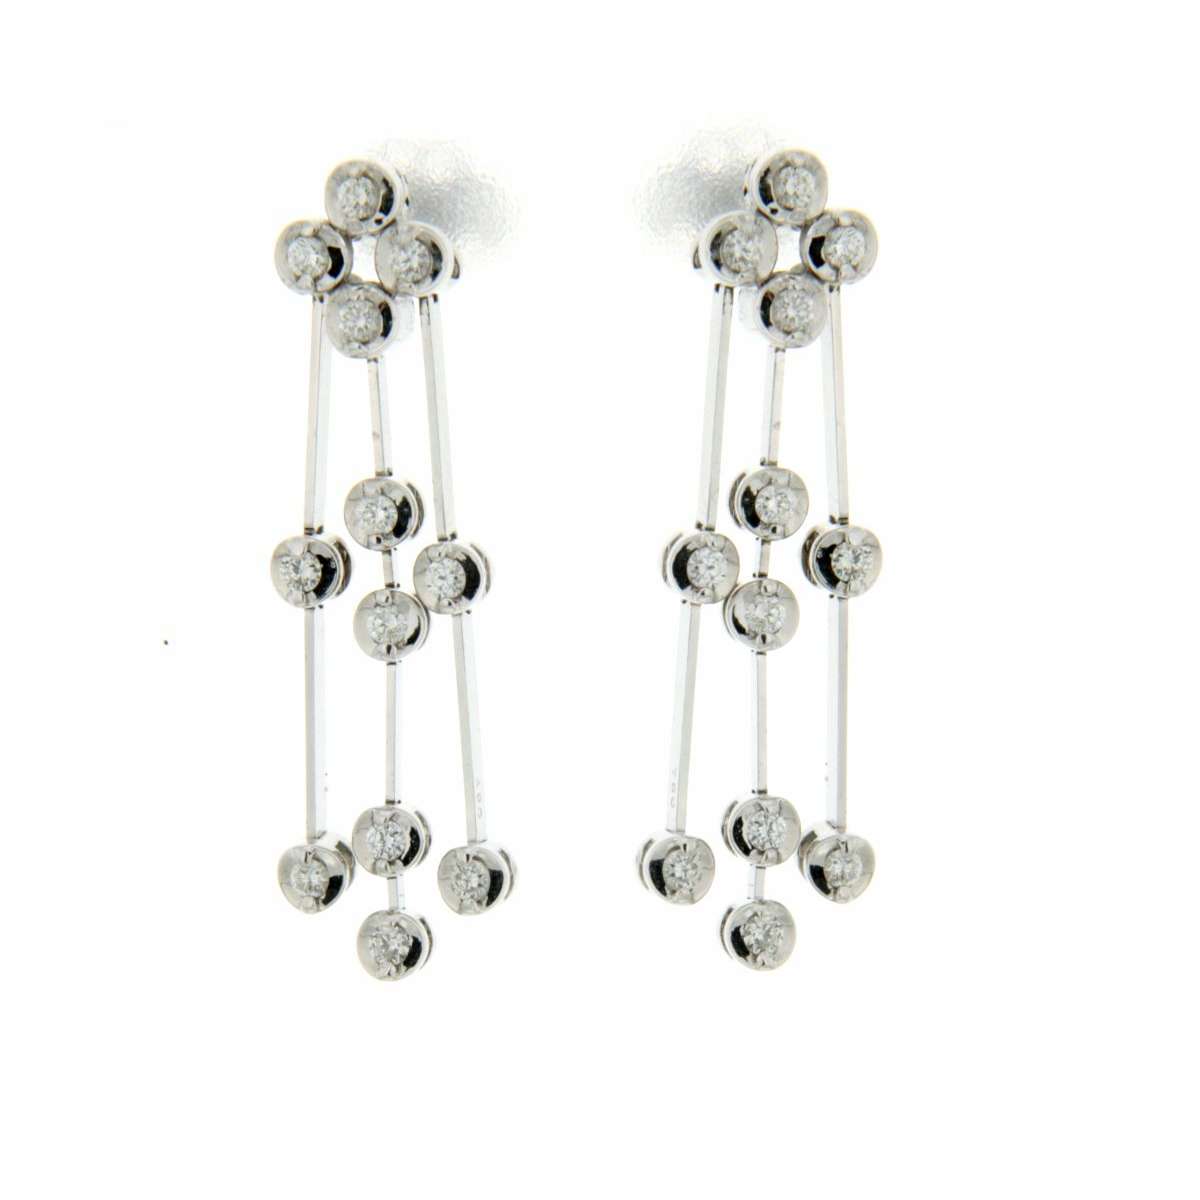 Dangling earrings 0.45 carats diamonds G Color VS1 Clarity